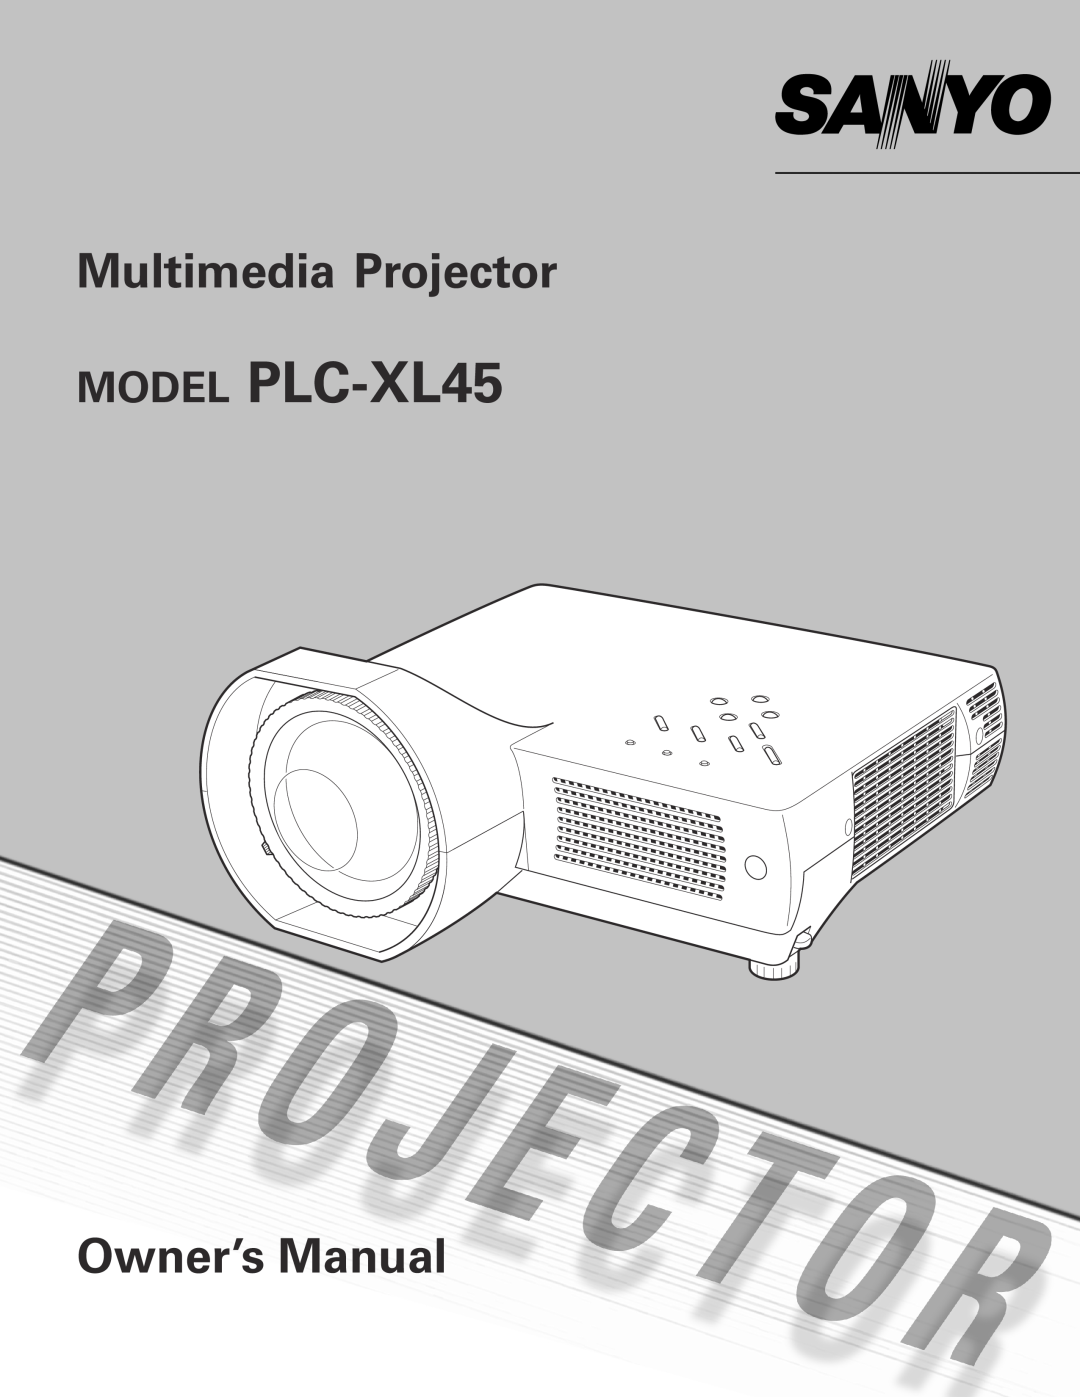 Sanyo owner manual MODEL PLC-XL45, Multimedia Projector, Owner’s Manual 